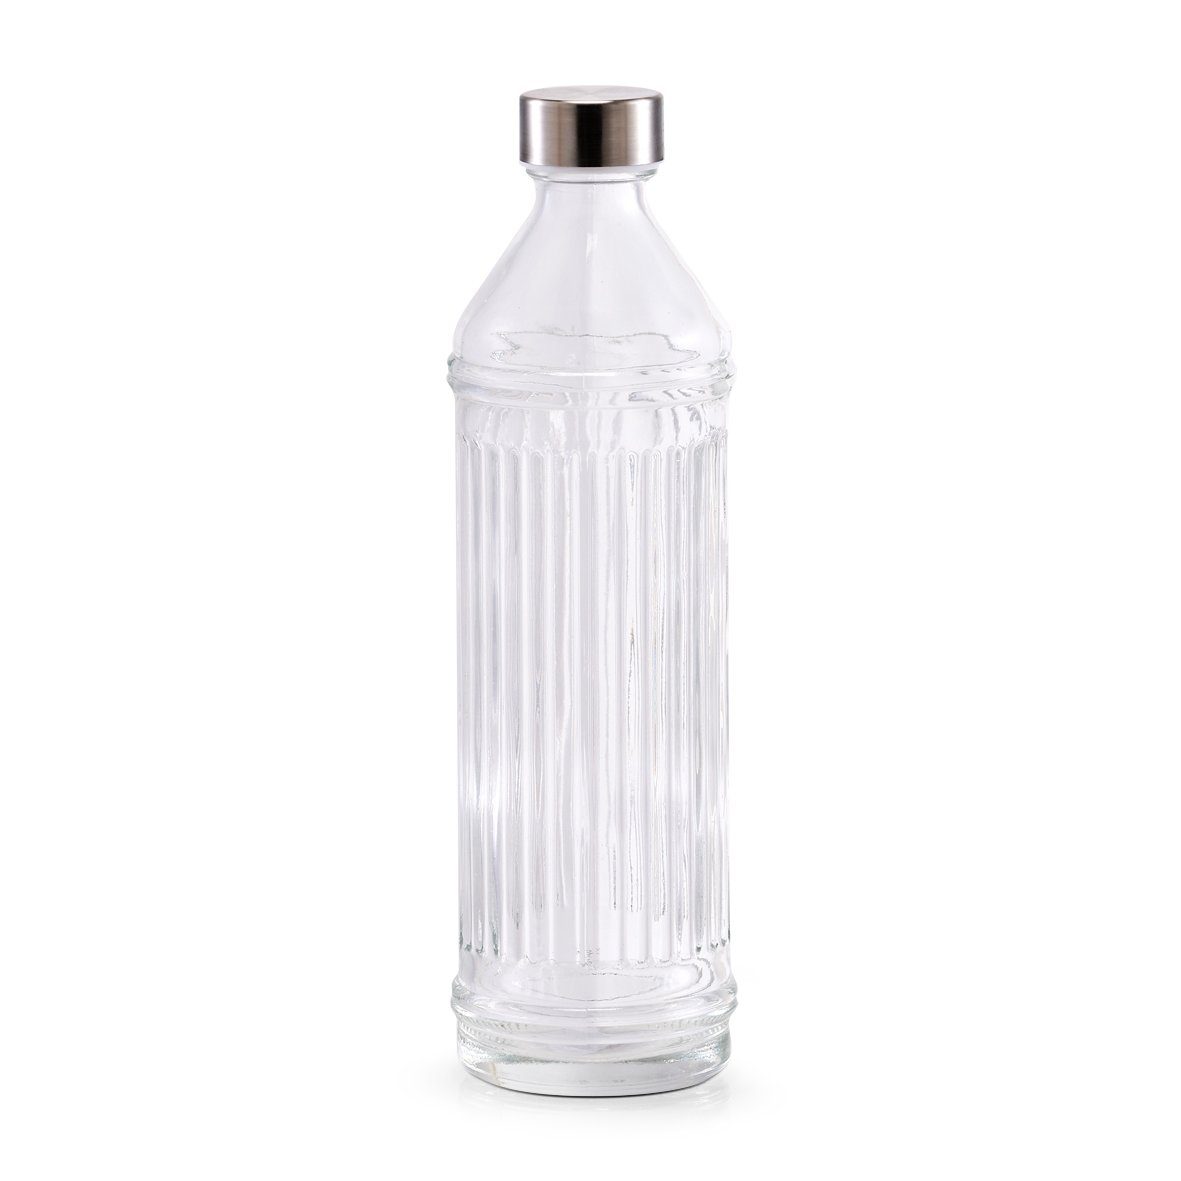 Zeller Present Trinkflasche Glasflasche, 970 cm transparent, x (soda lime glass) /Edelstahl, Ø8,5 ml, Glas 30